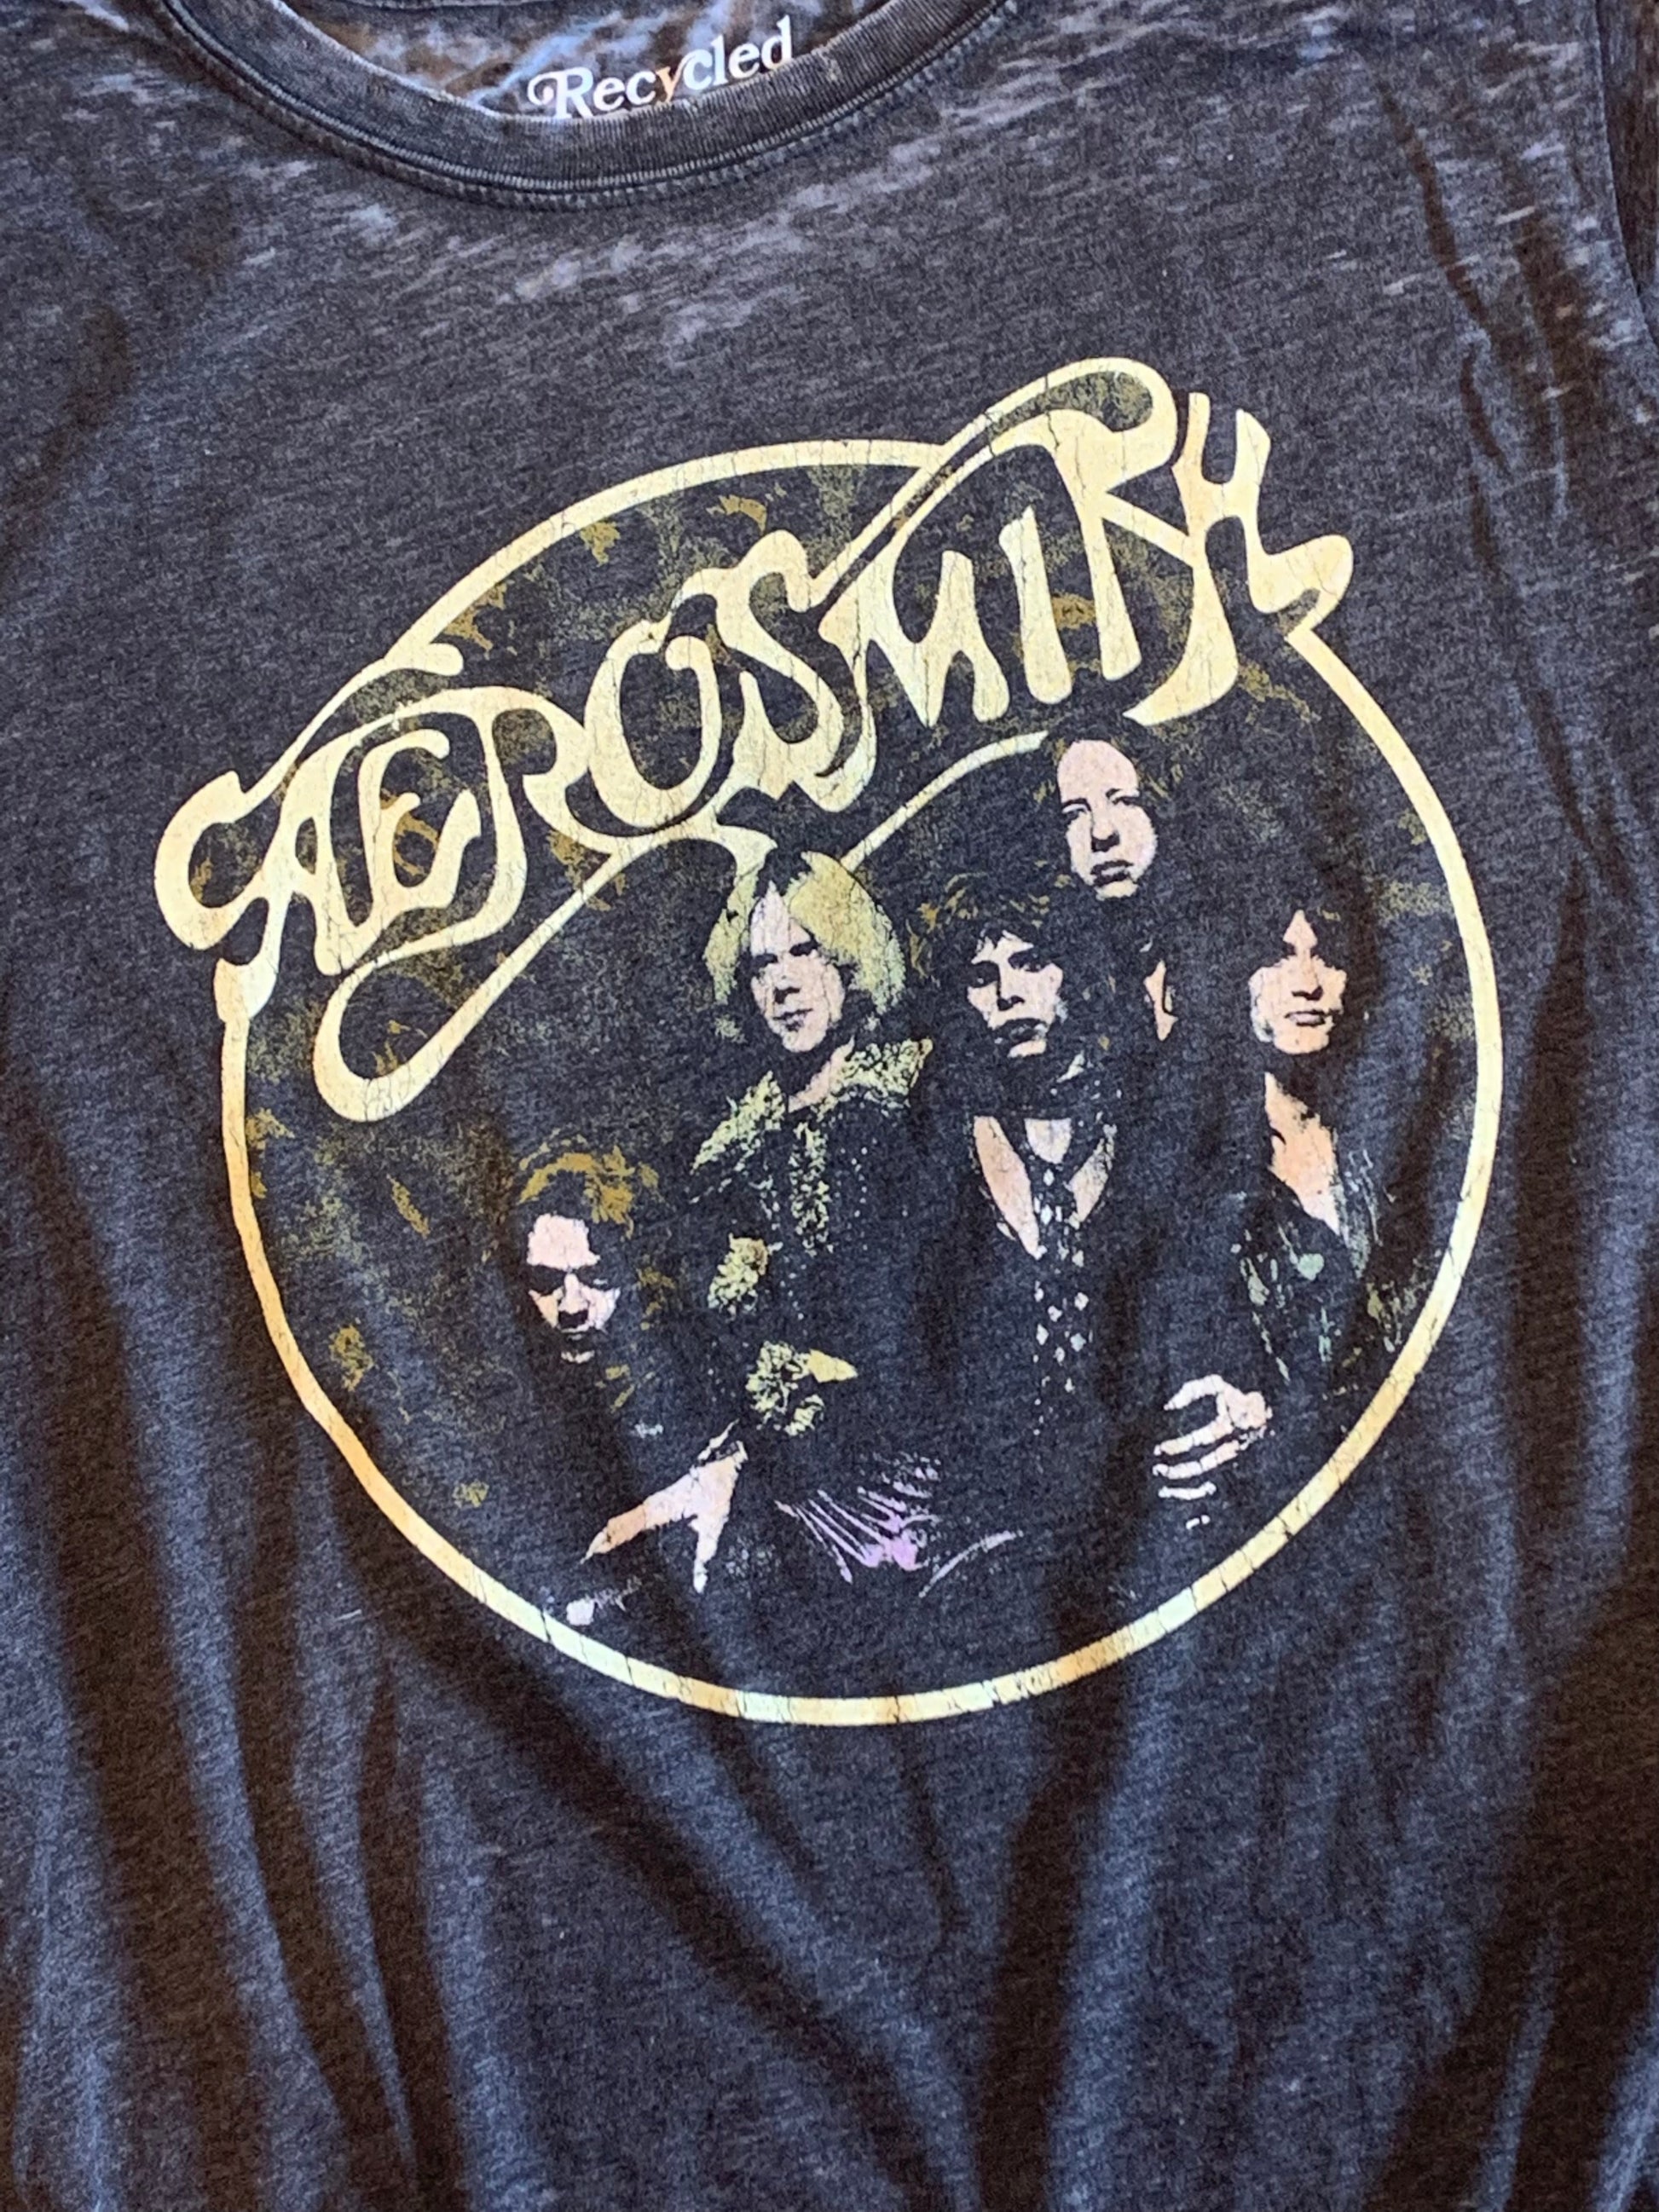 Aerosmith Farewell Tour And Their Signatures T-shirt